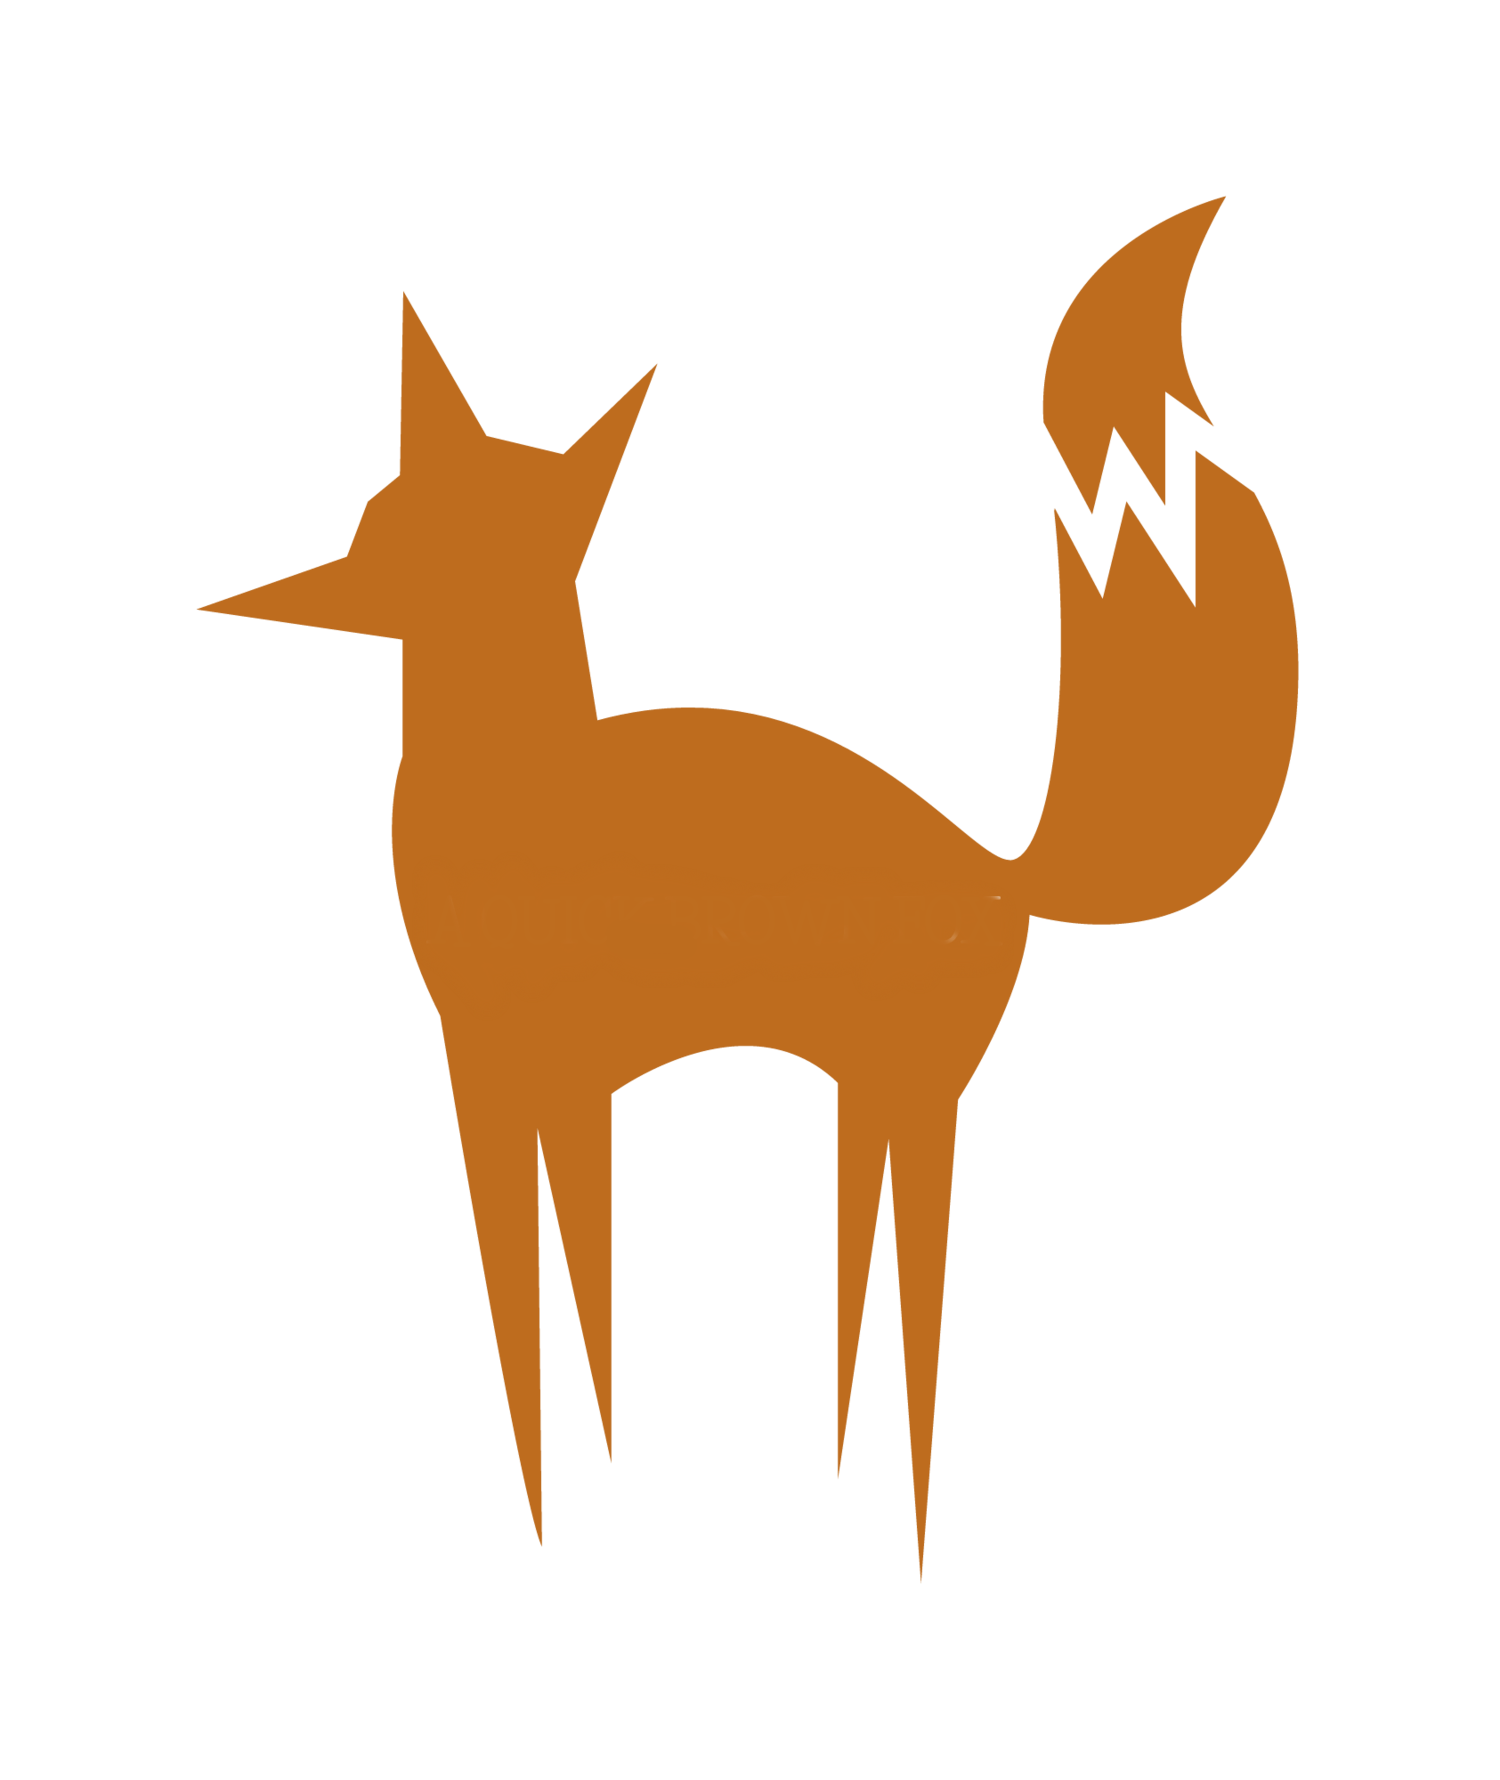 A Quick Brown Fox